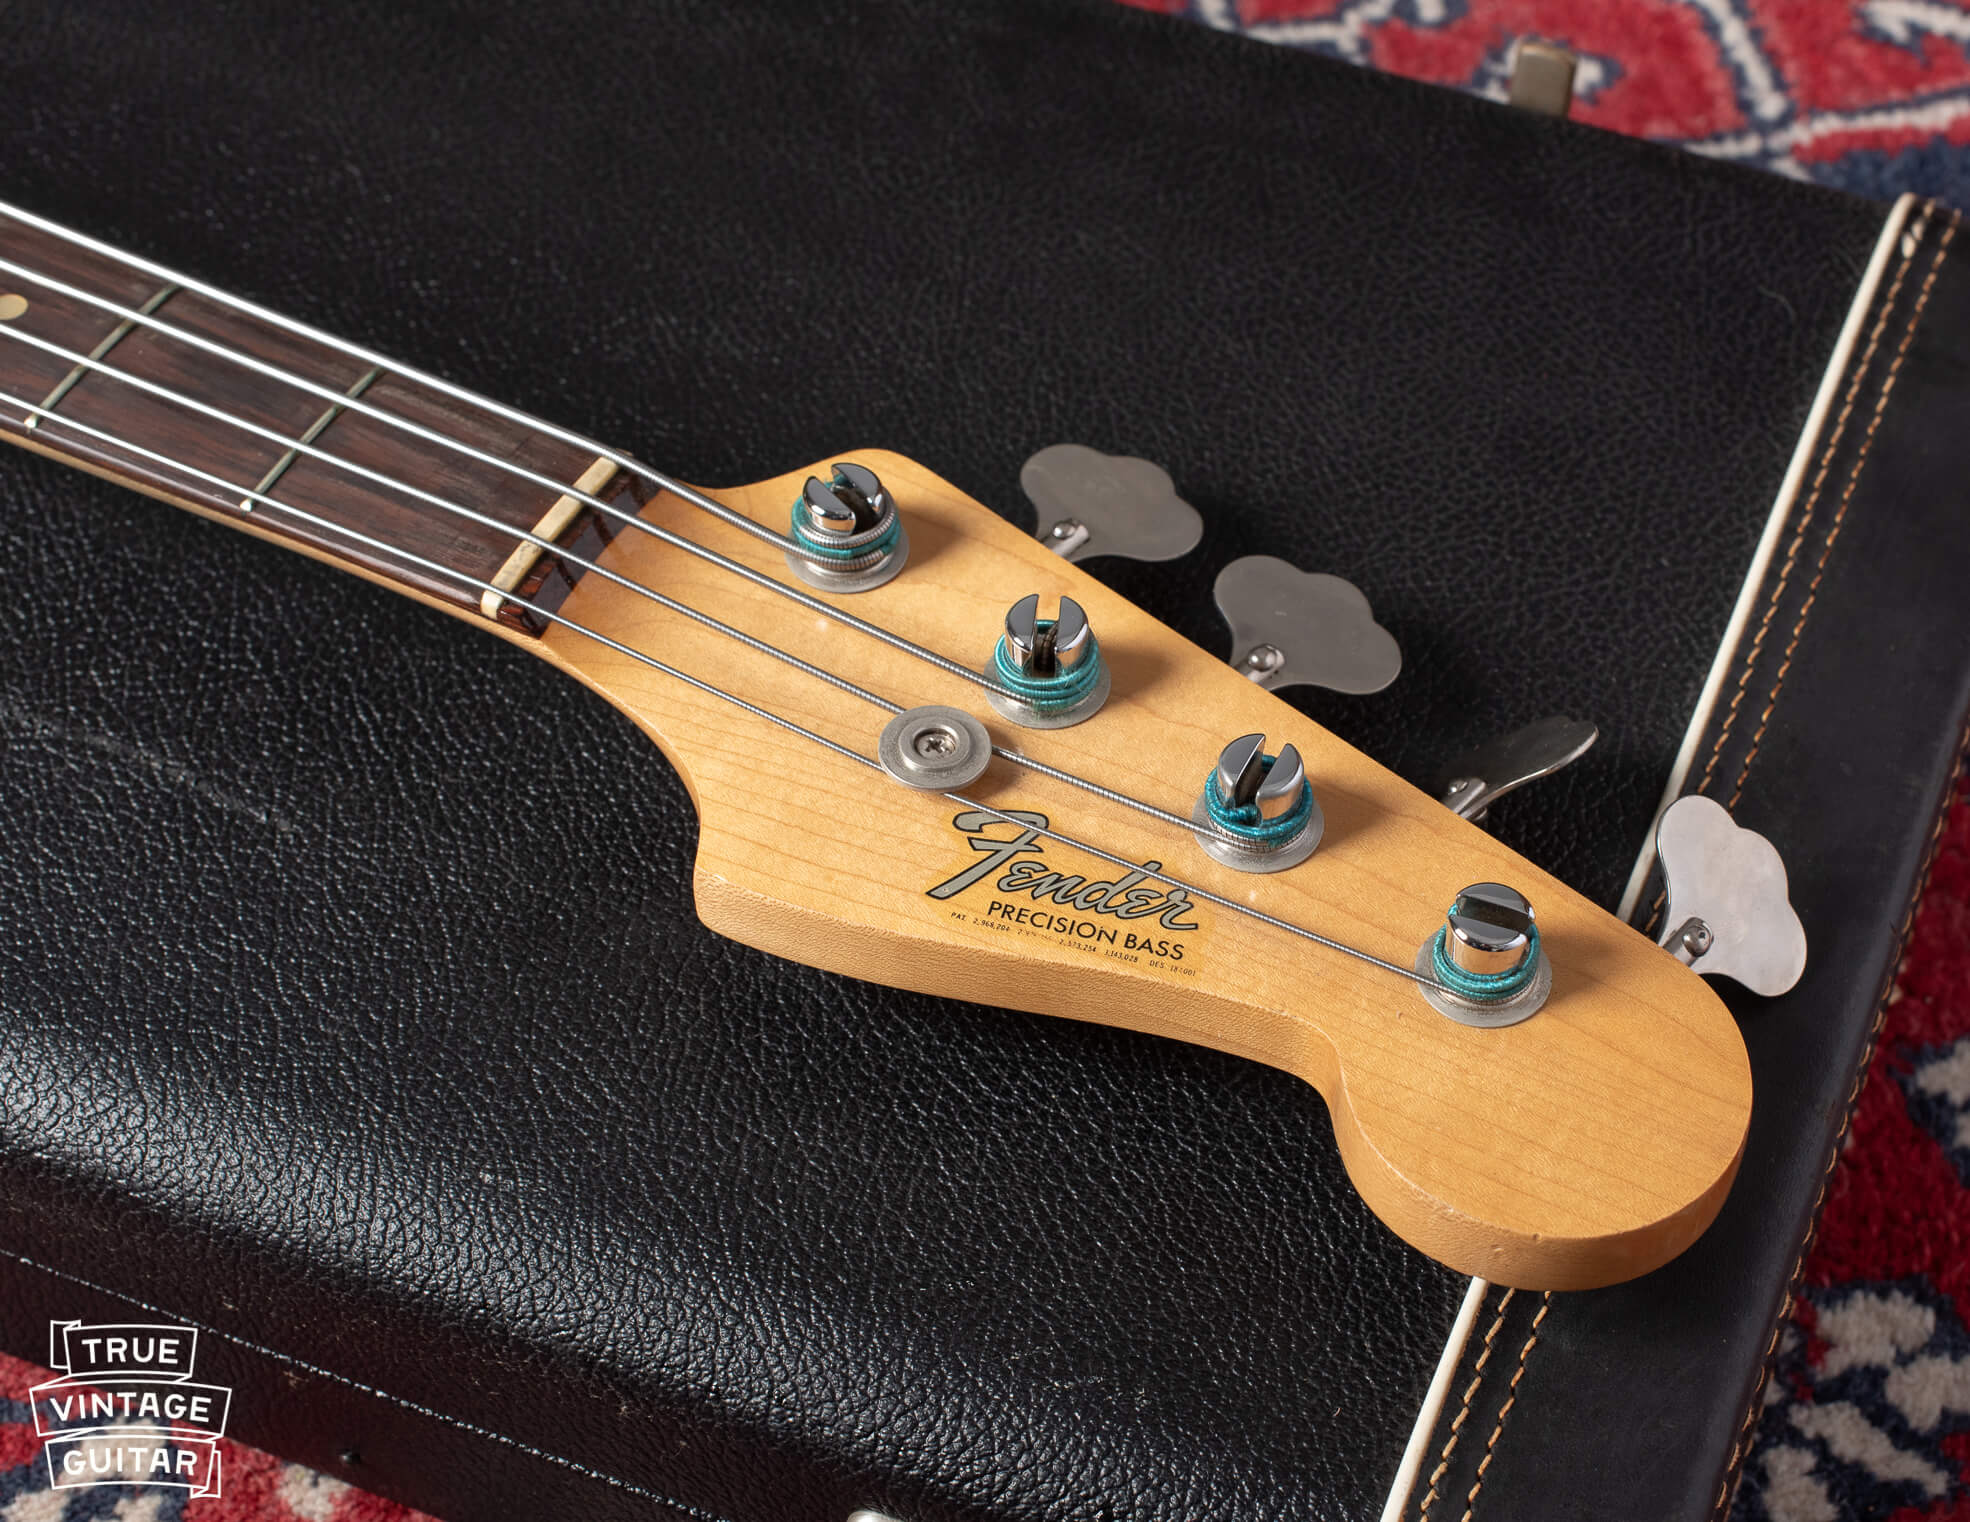 Fender Precision Bass 1965 white with original blue silk wrapped strings